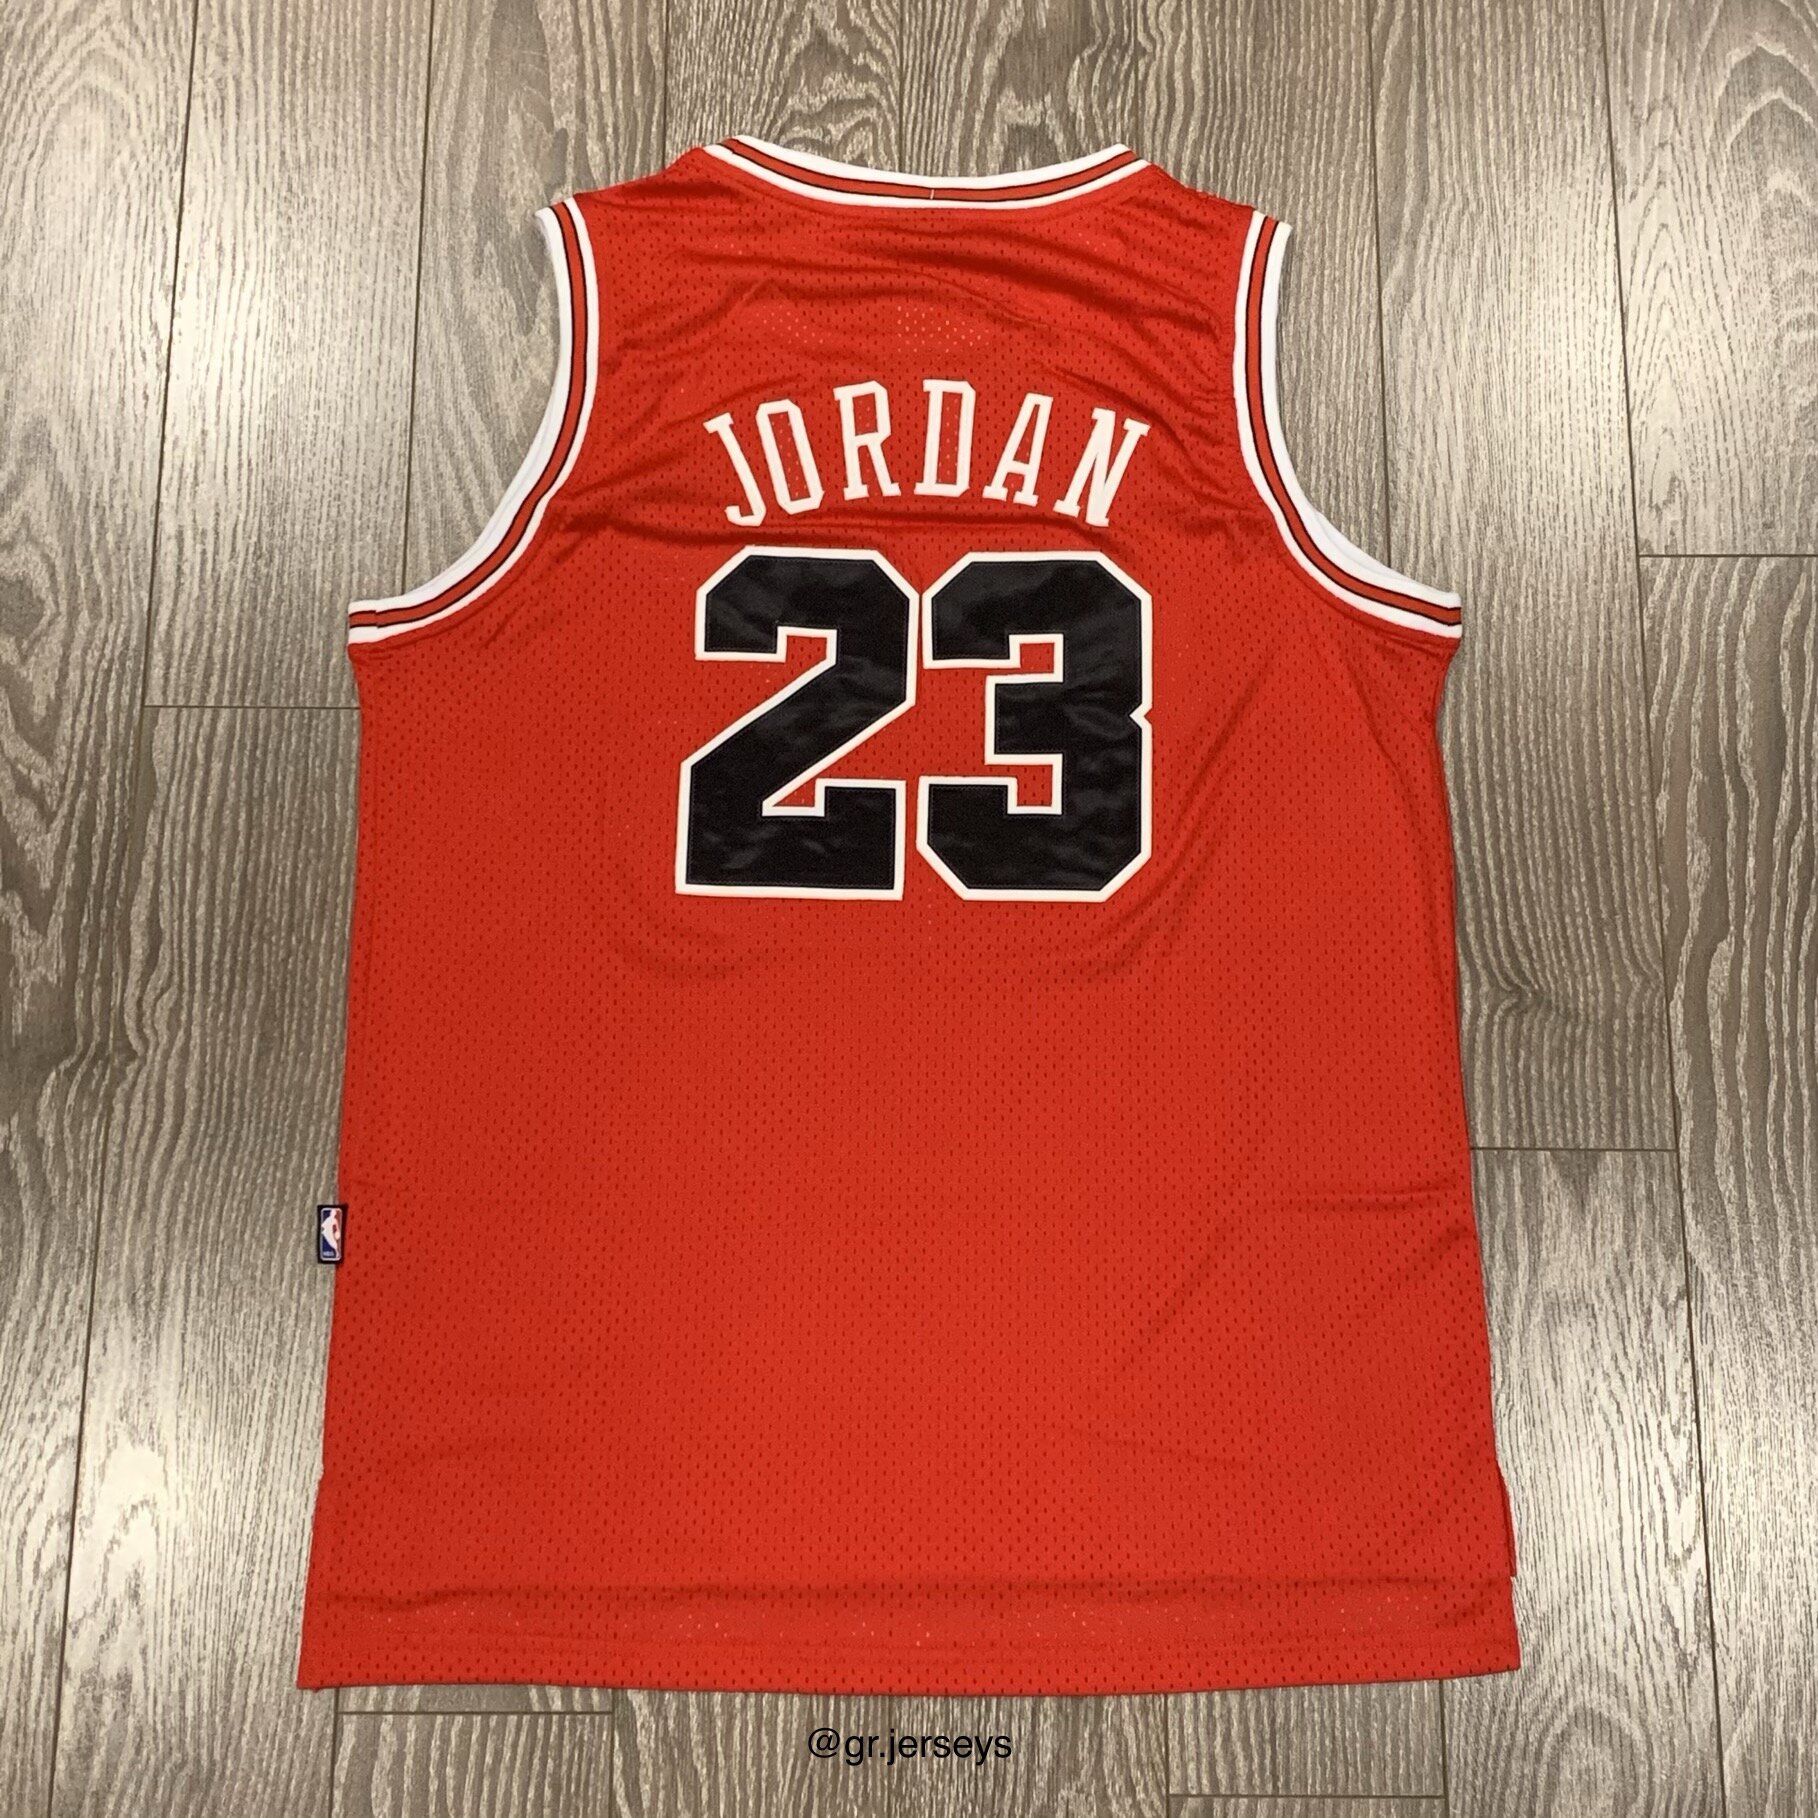 cursive chicago jordan jersey